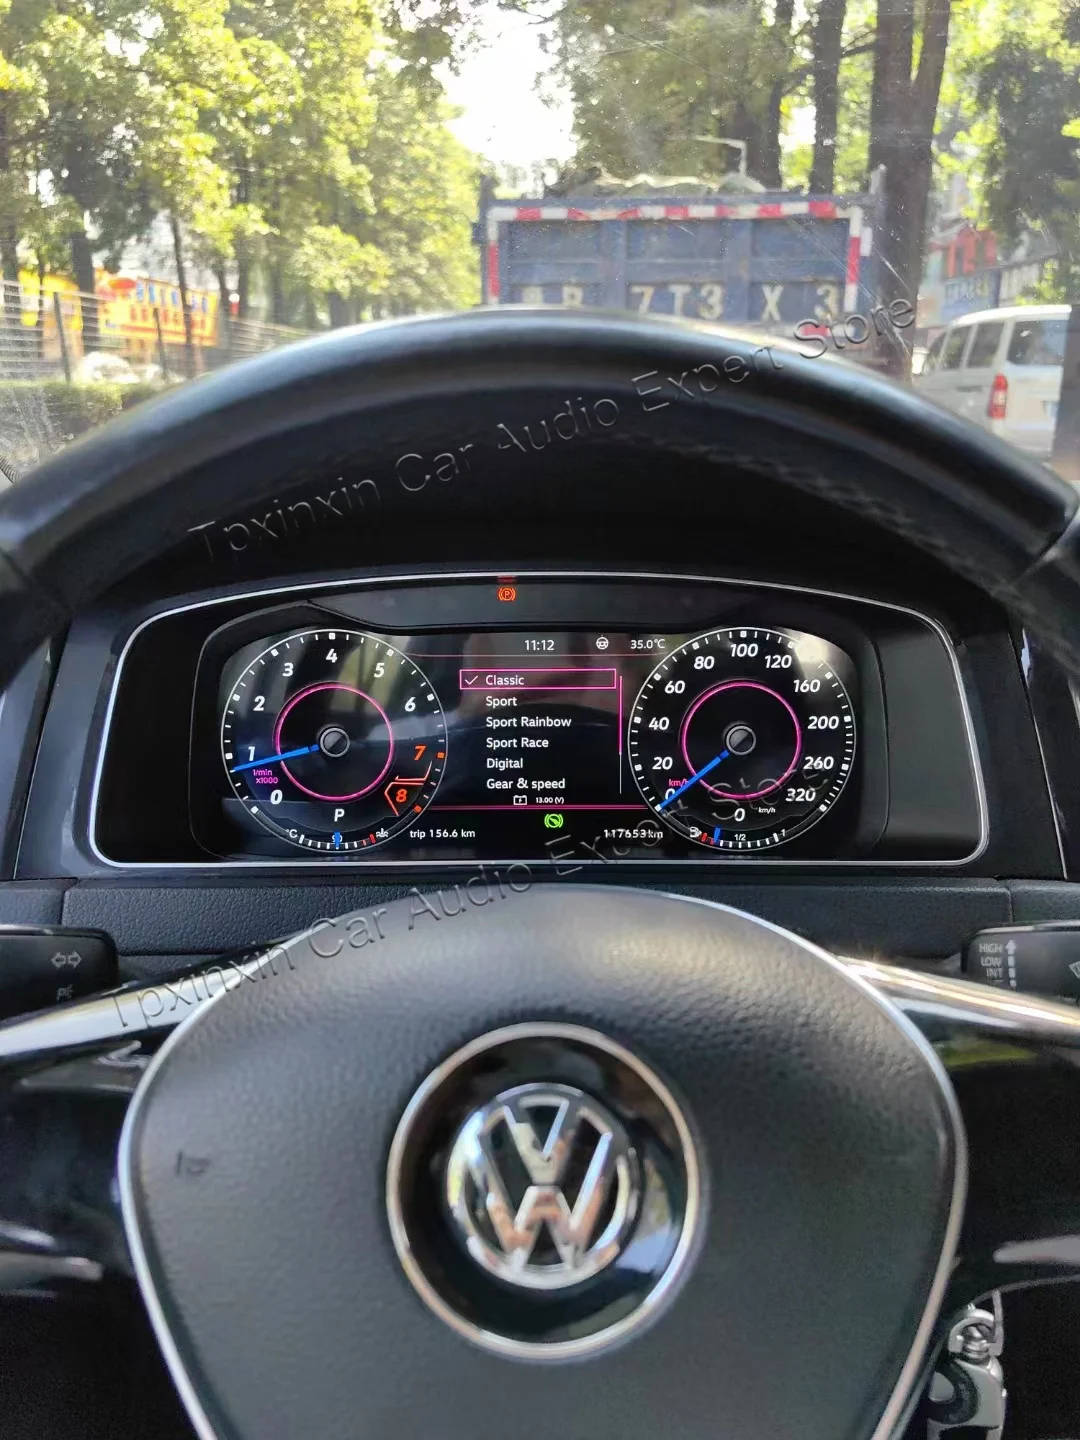 LCD Digital Cluster For Volkswagen Golf 6 2008-2014 Virtual Cockpit Speed Meter HeadUnit Car Accesorries Car Dashboard Display